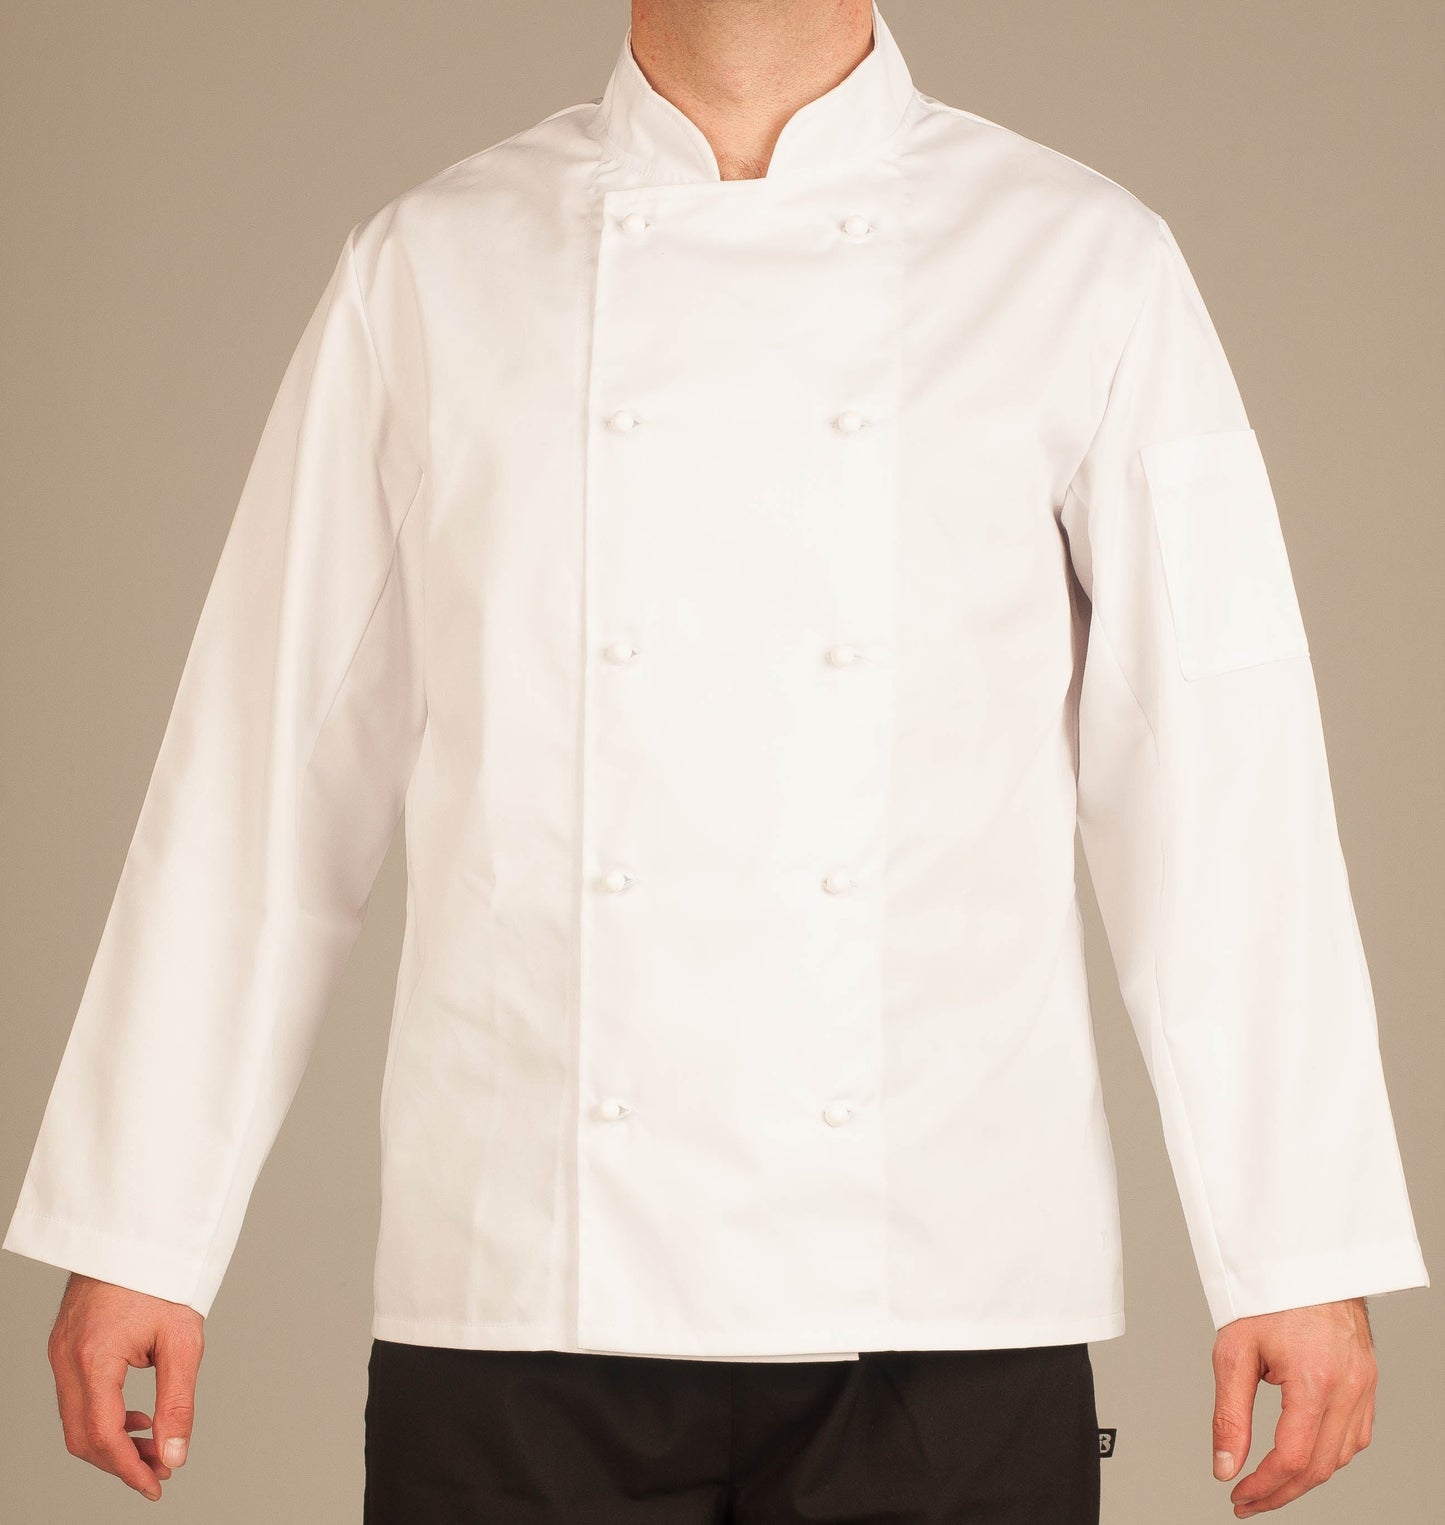 Chef Jacket - Long Sleeves White